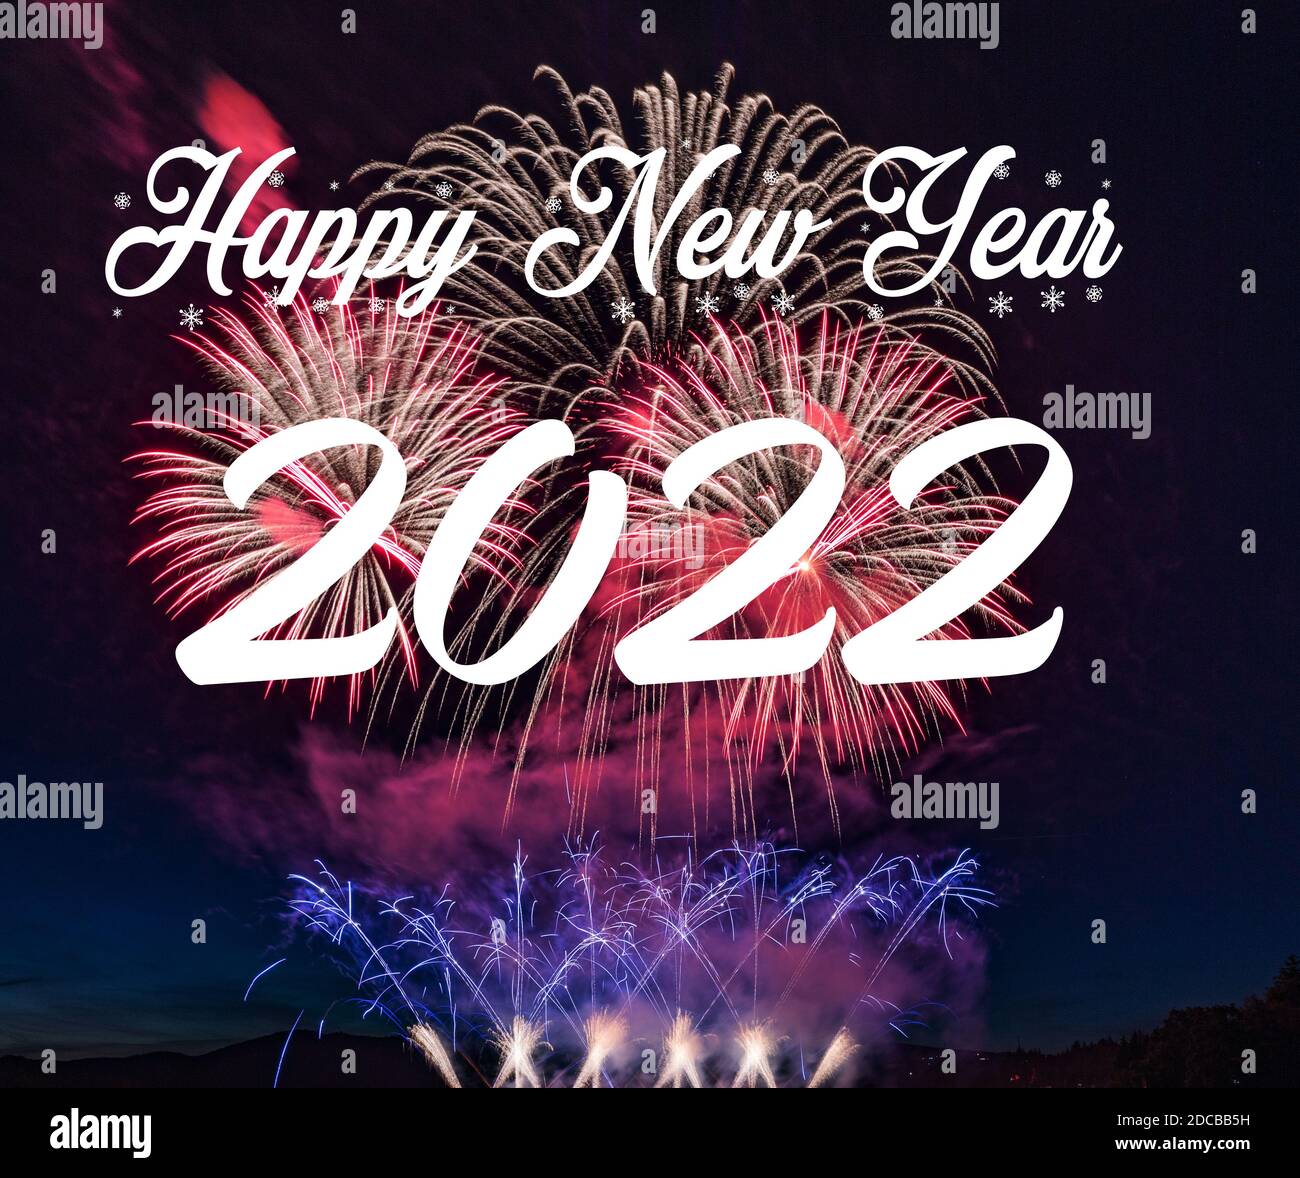 Happy new year 2022 photo